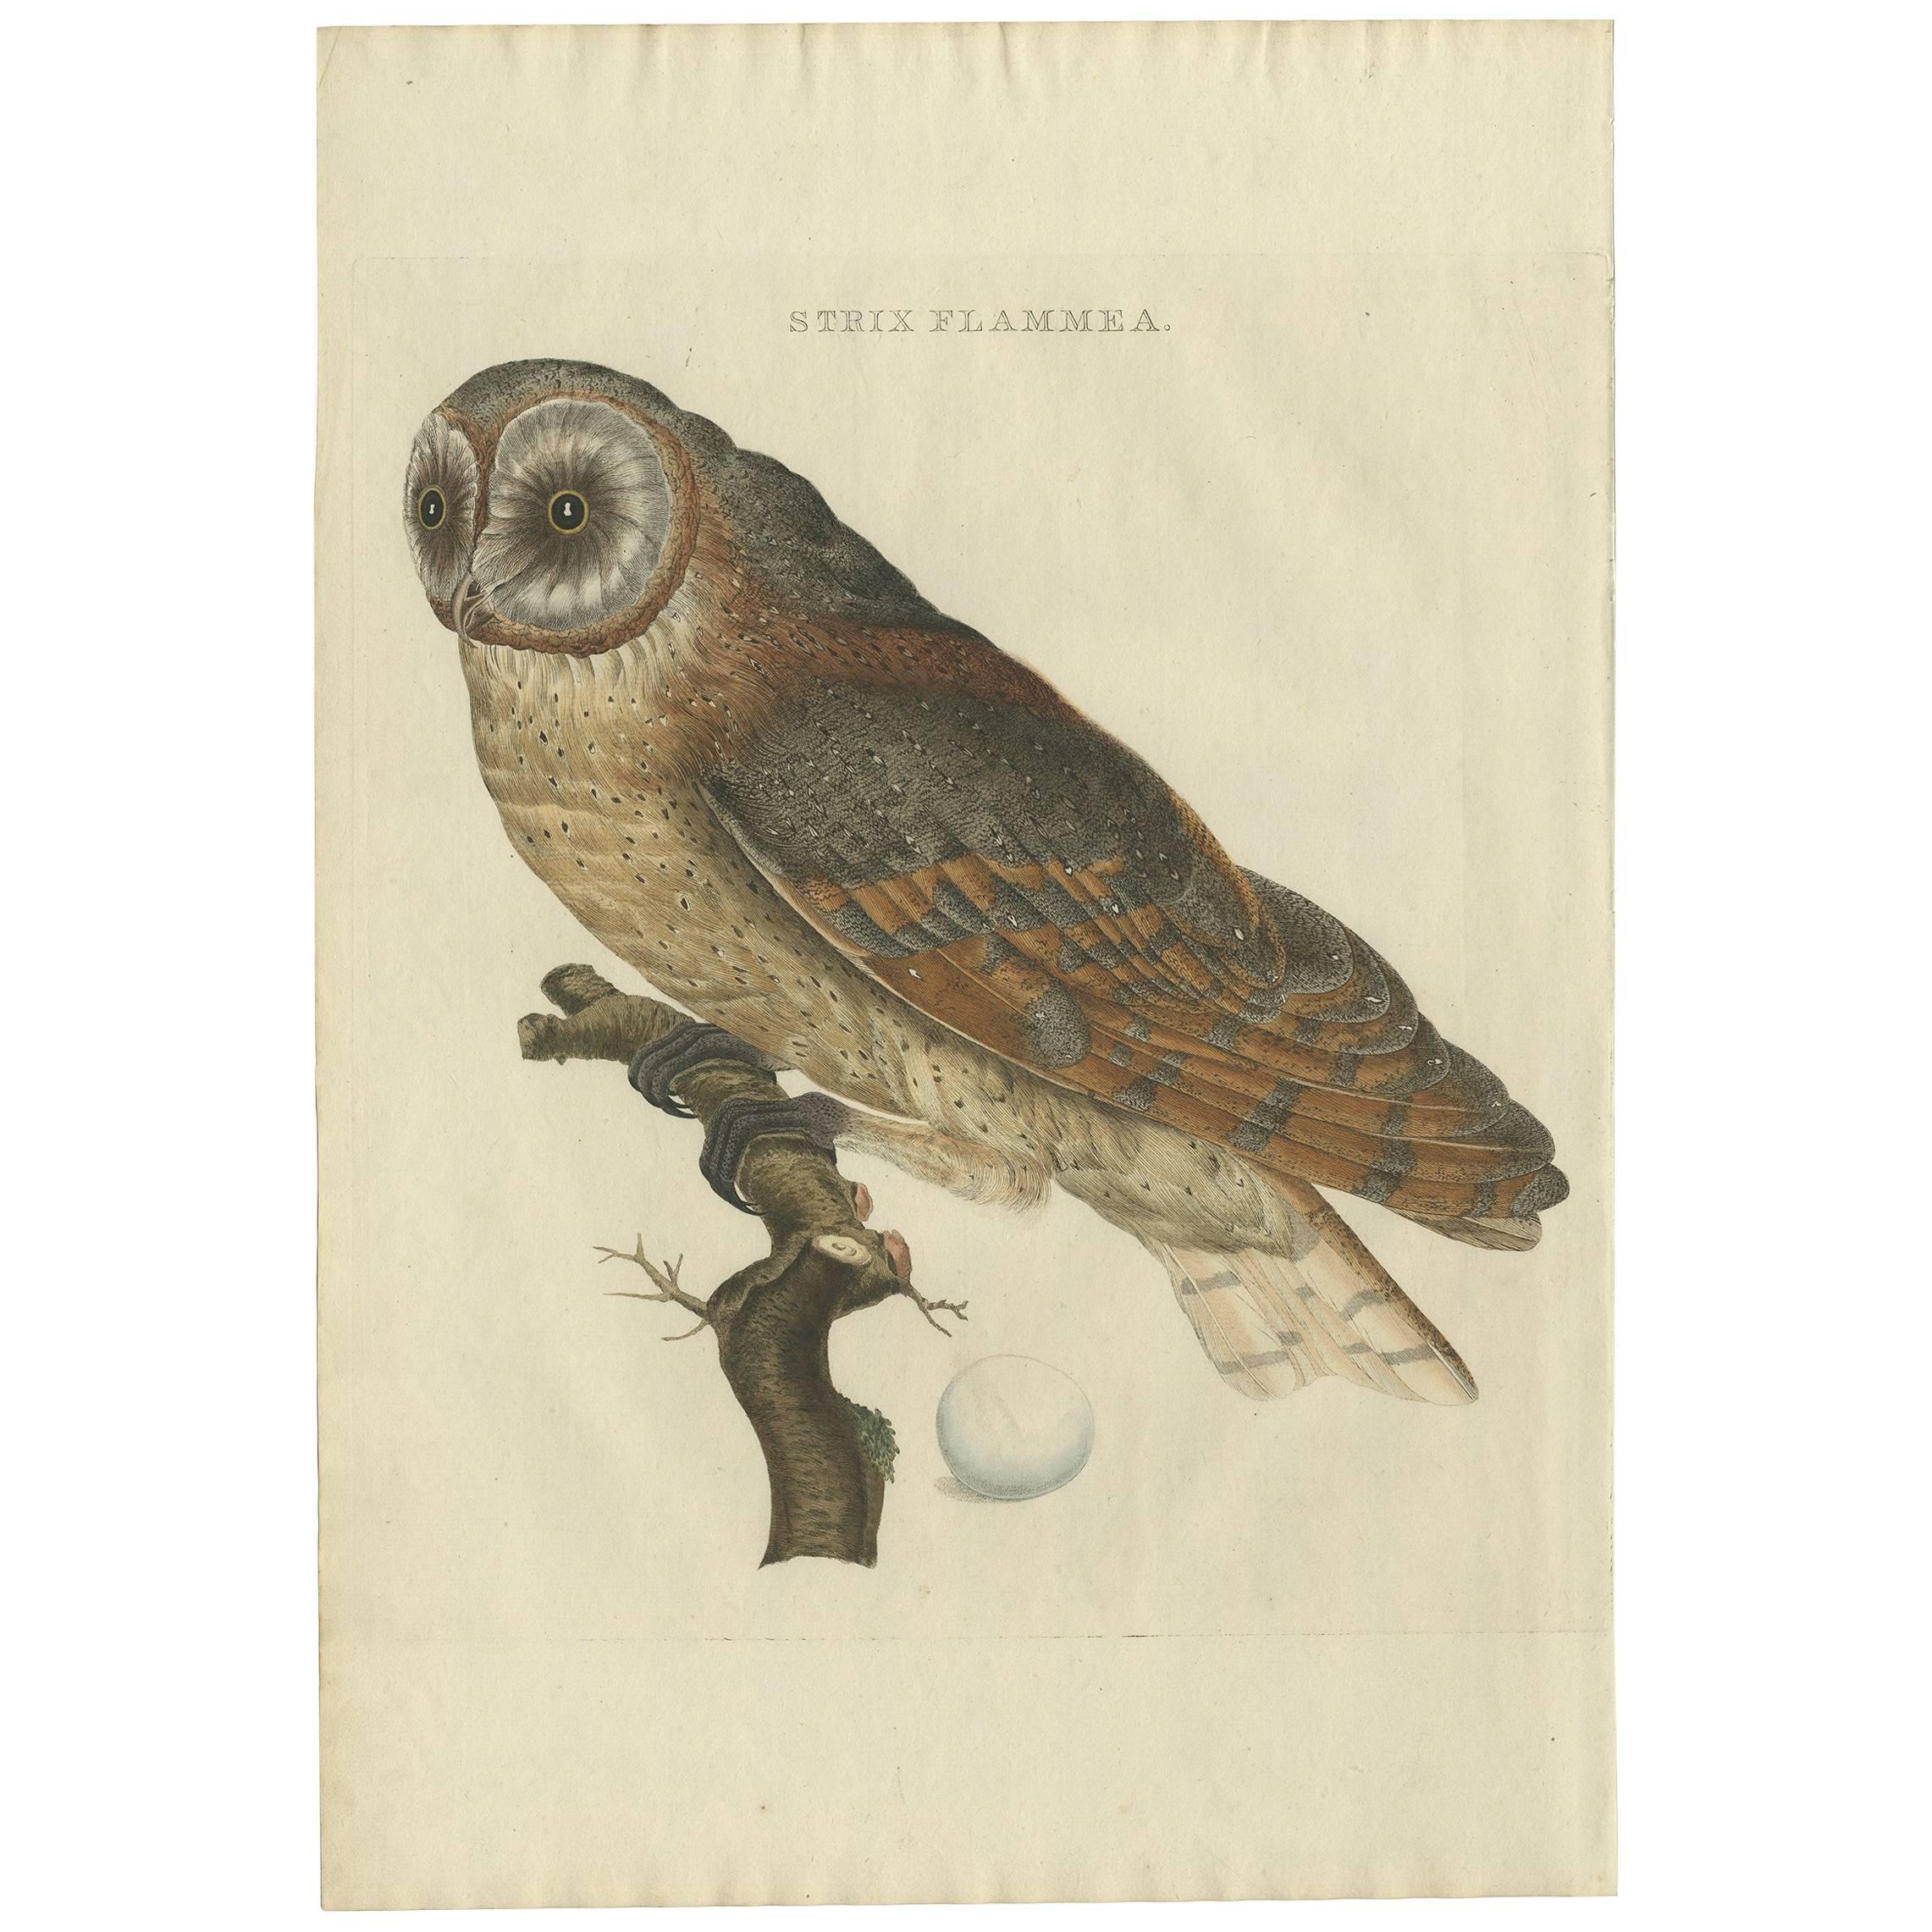 Antique Bird Print of the Barn Owl by Sepp & Nozeman, 1809